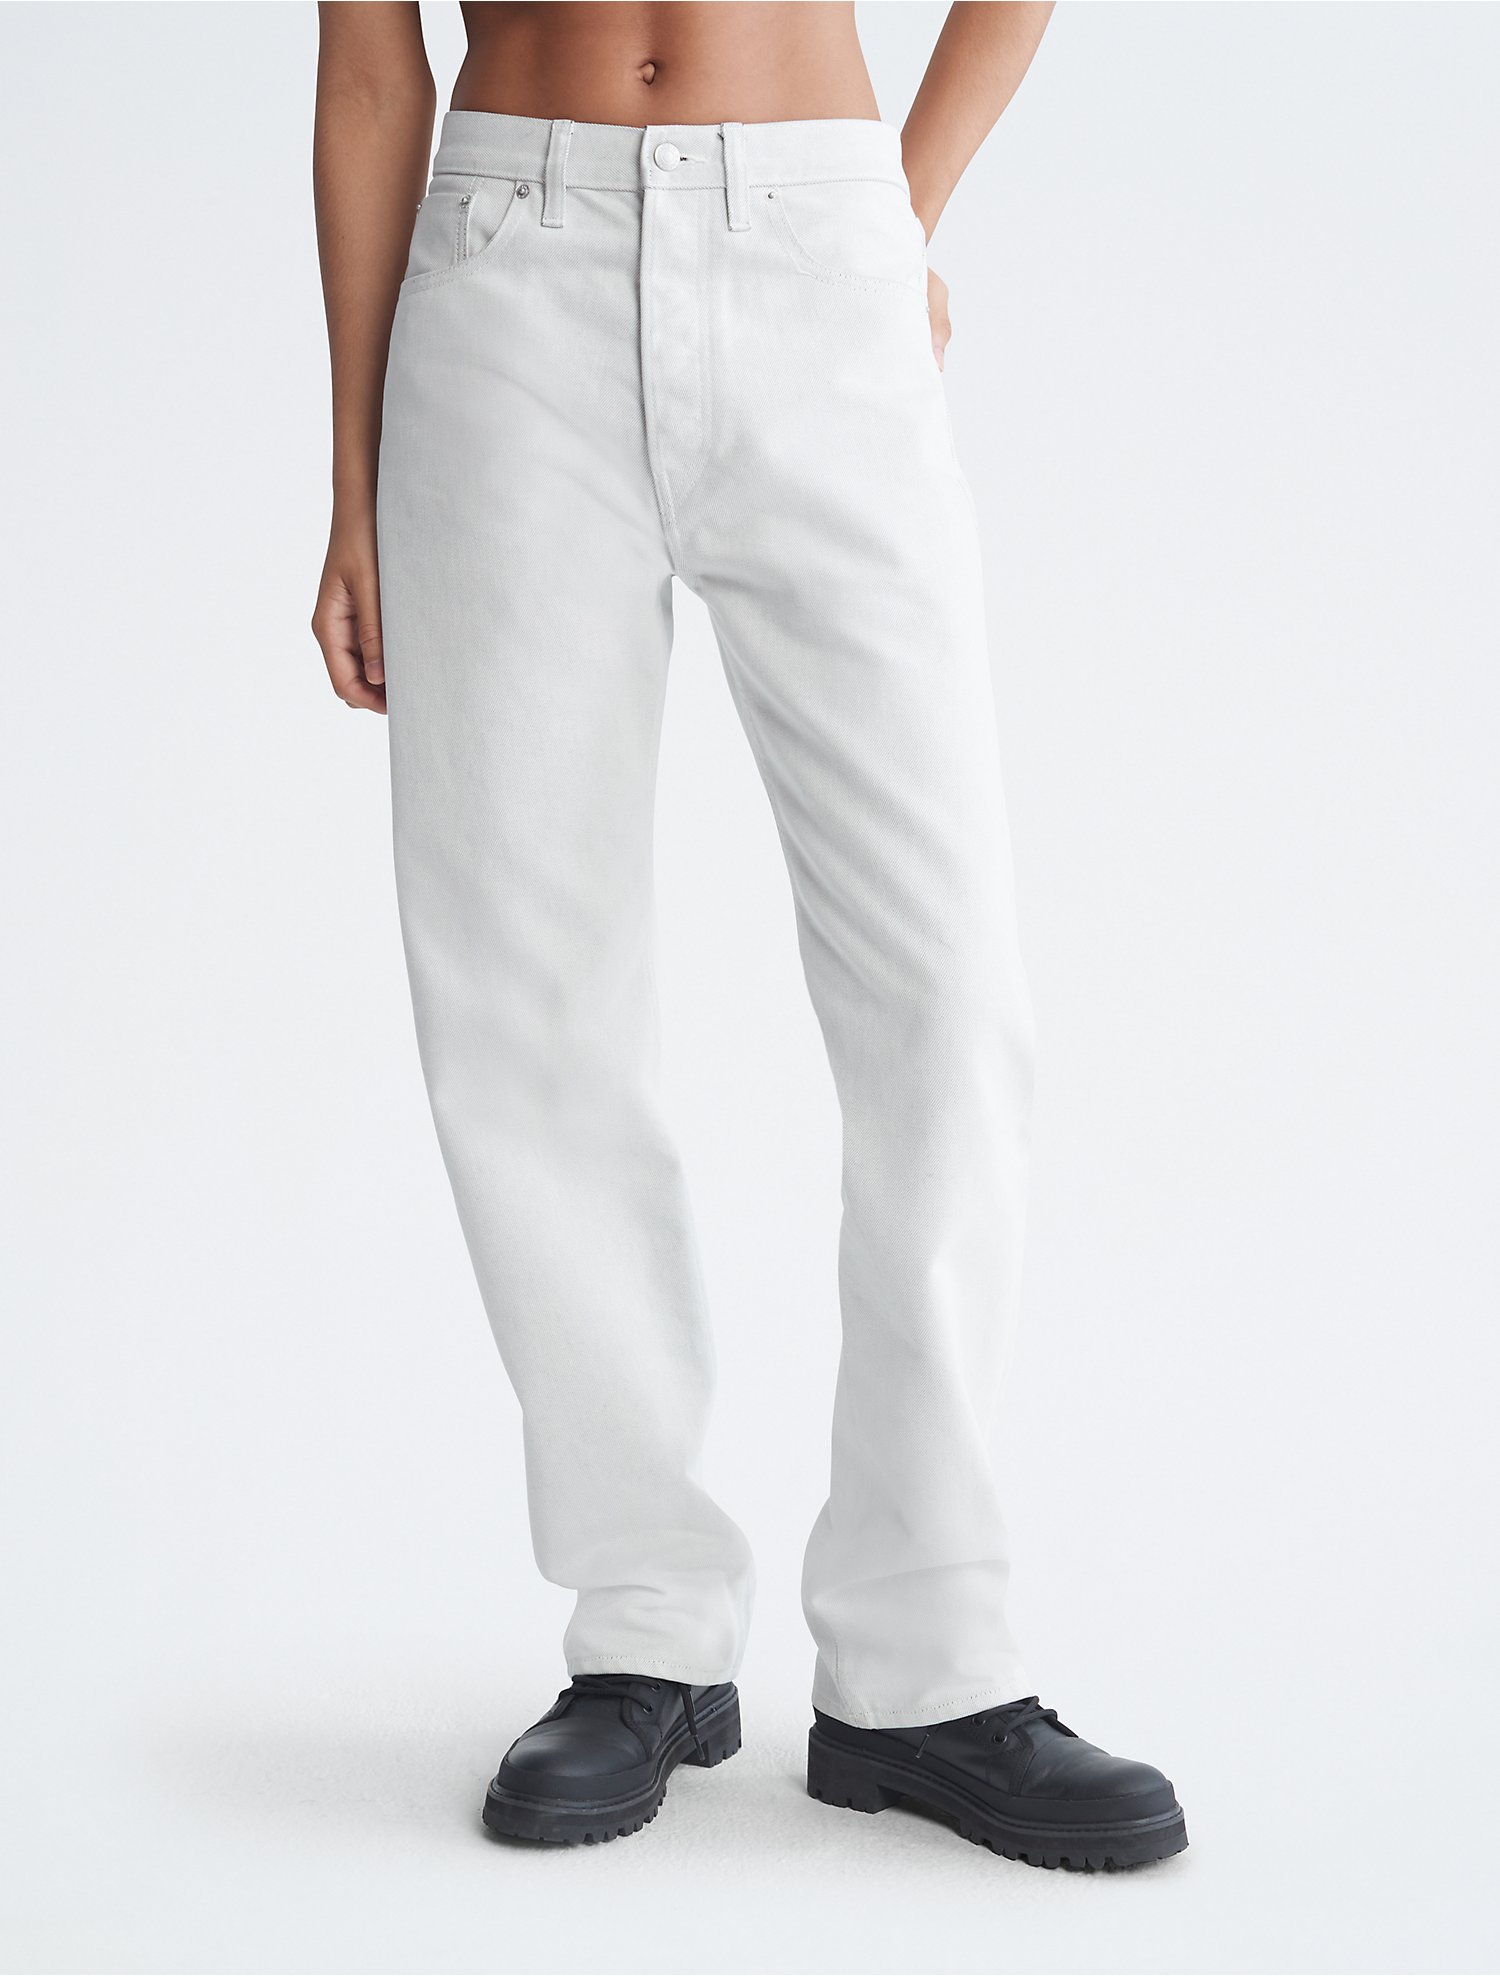 Malaise Beperking Blauwdruk Standards Straight Fit Jeans | Calvin Klein® USA